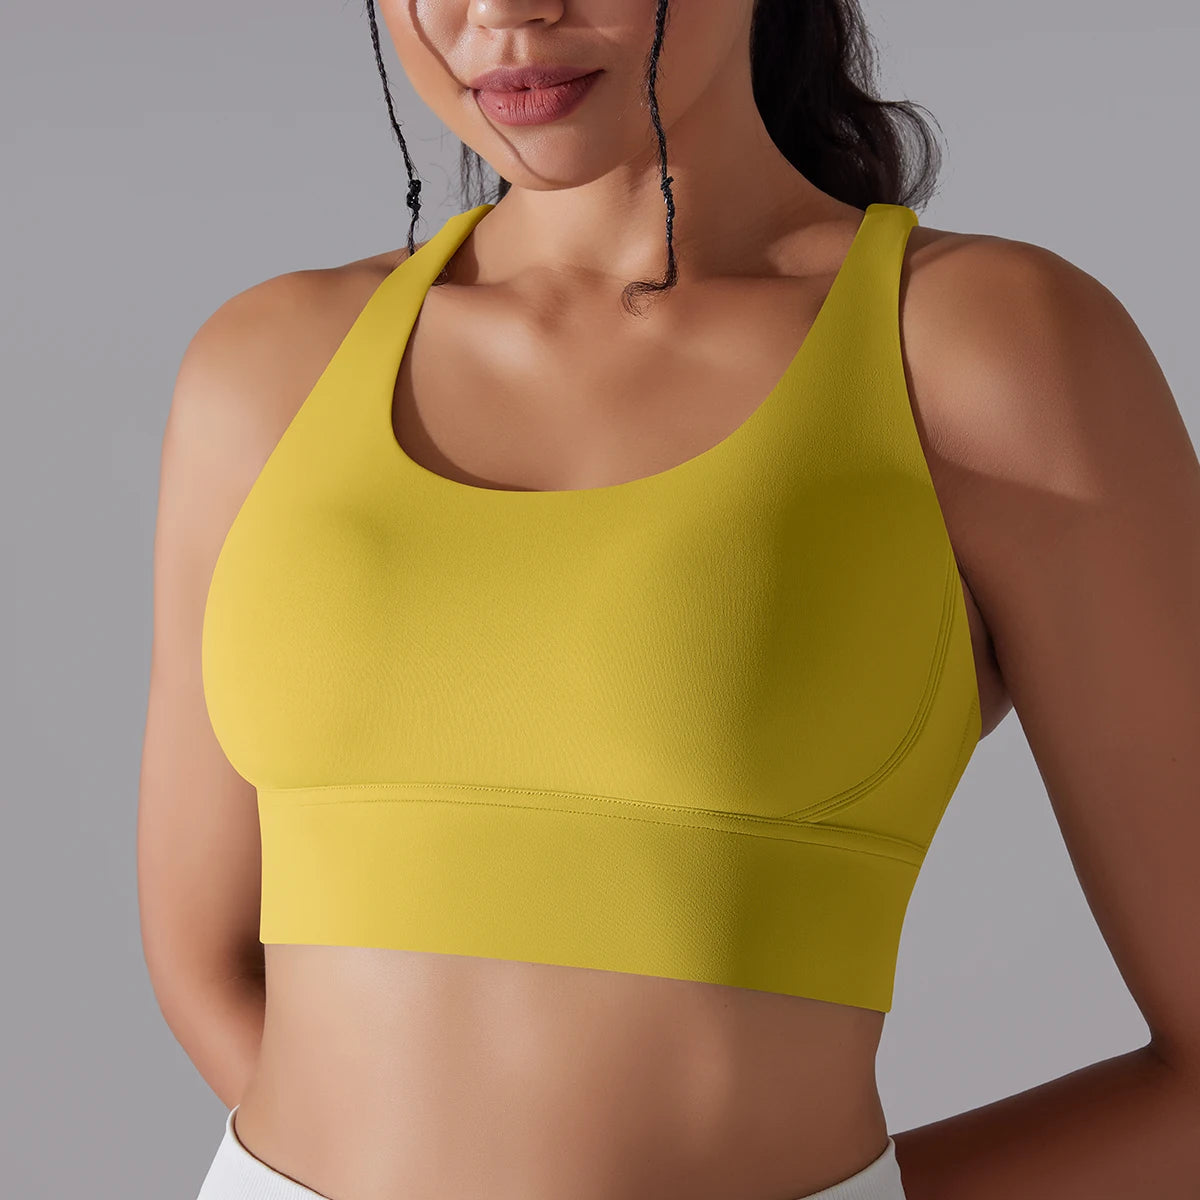 Women's Yoga Bra Tank Tops for Fitness Sport Bra Gym Vest Women Camisole Workout Underwear Sportswear Outfit The Clothing Company Sydney